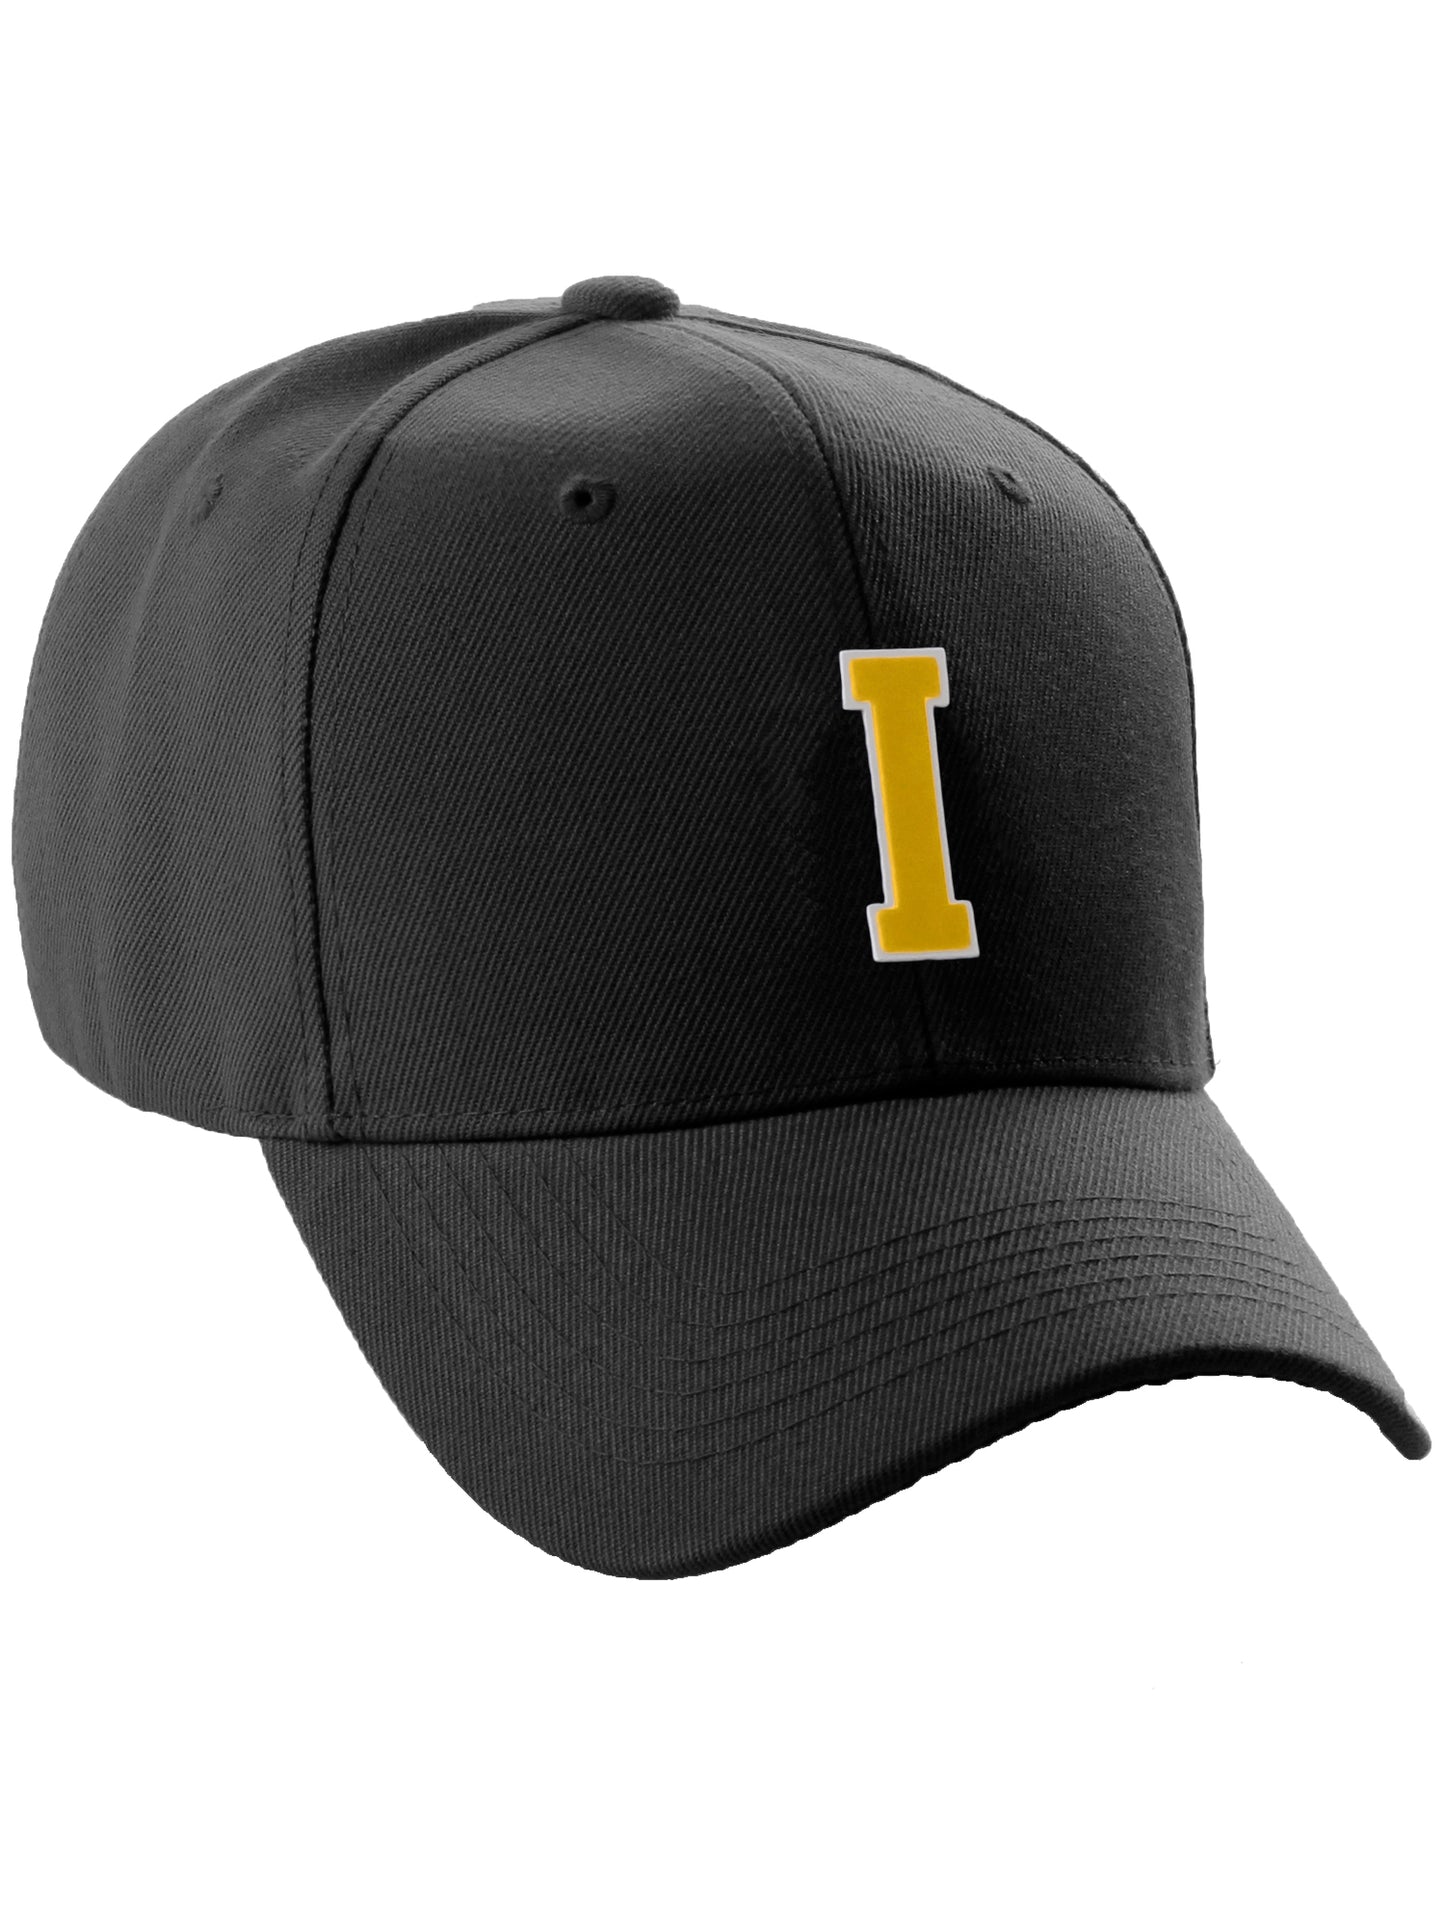 Classic Baseball hat Custom A to Z Initial Team Letter, Black Cap White Gold